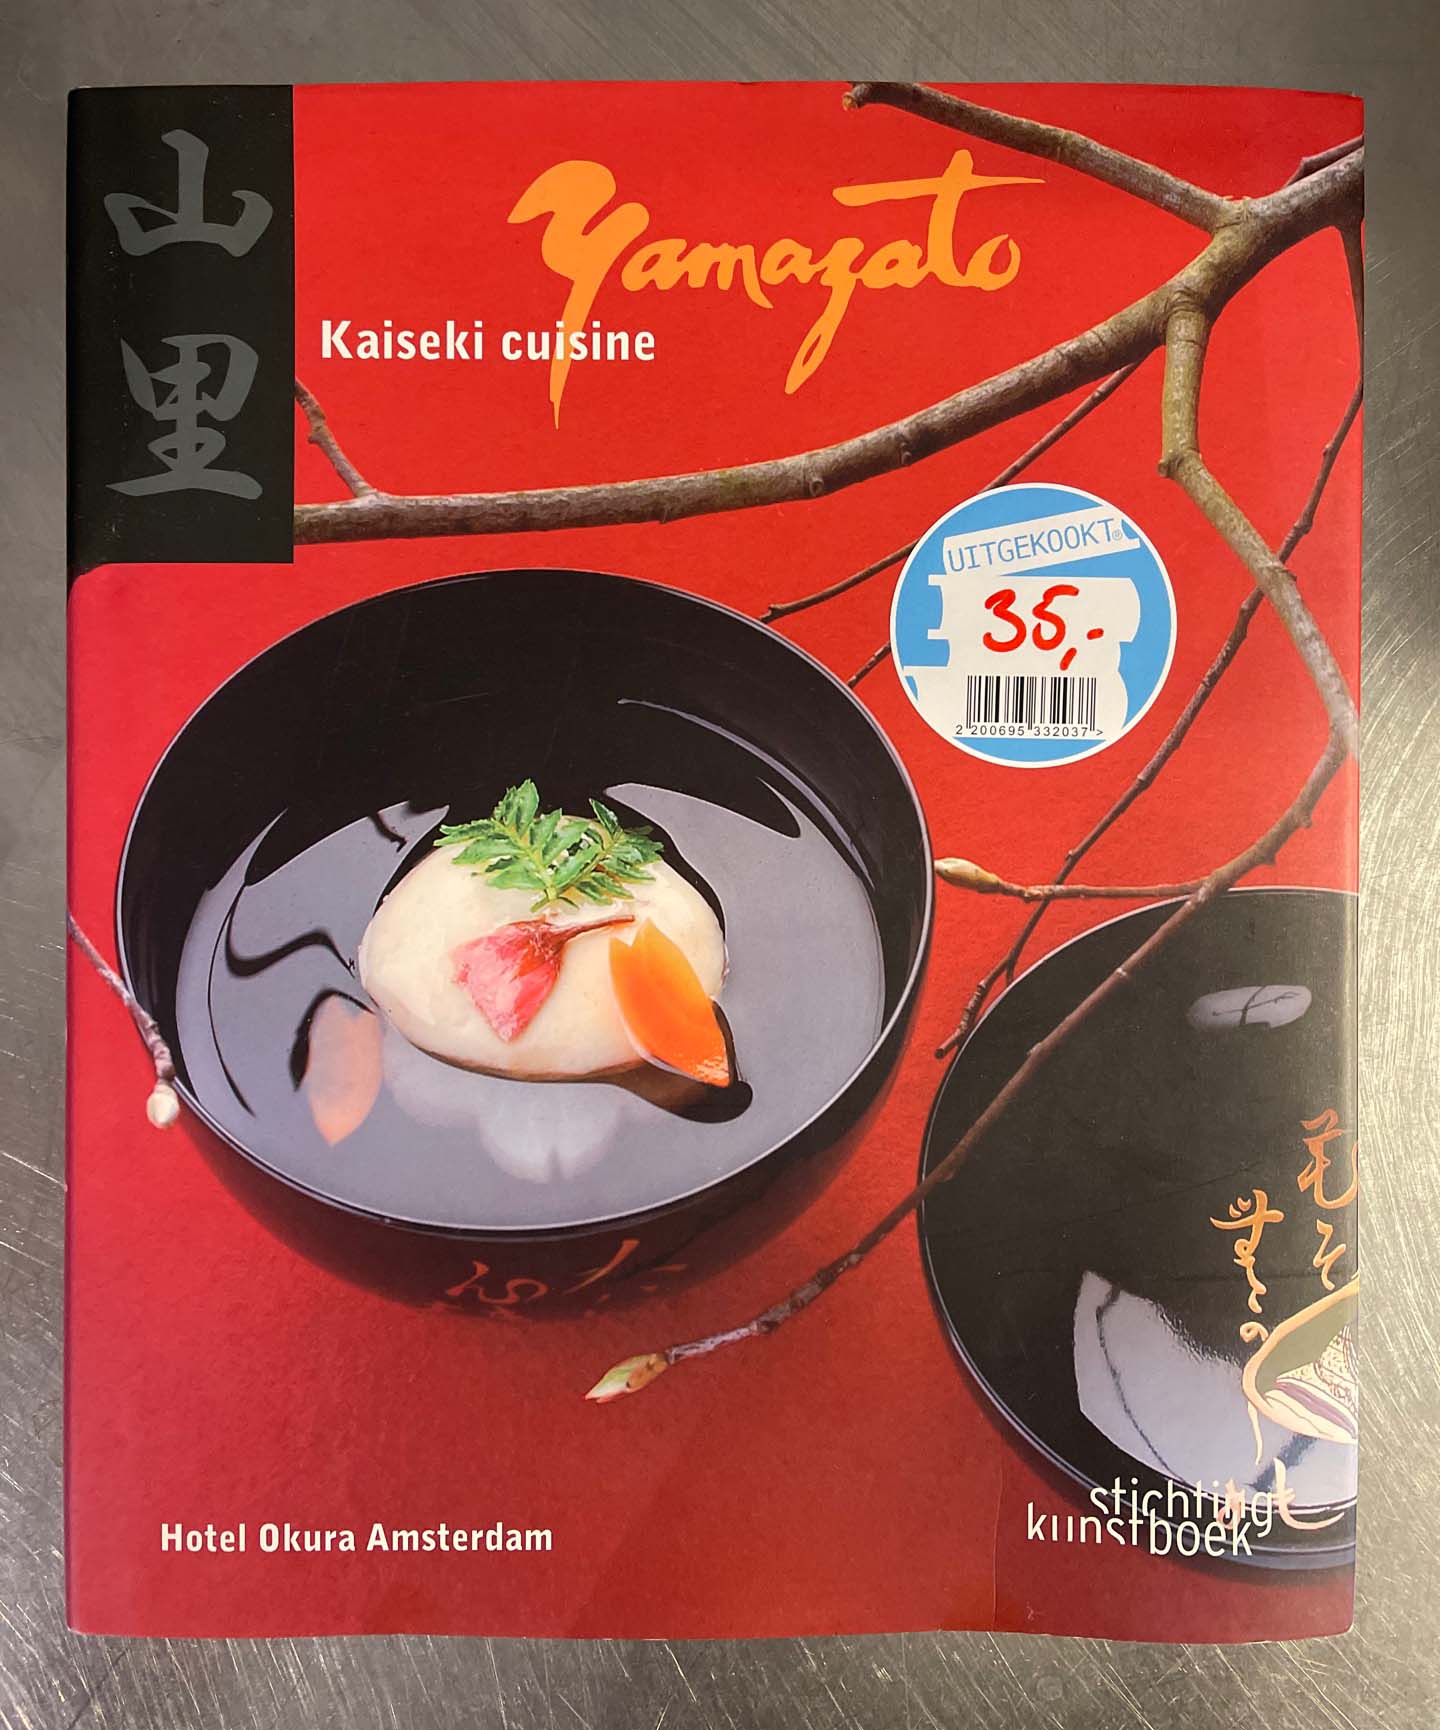 Kaiseki cuisine – Yamazato